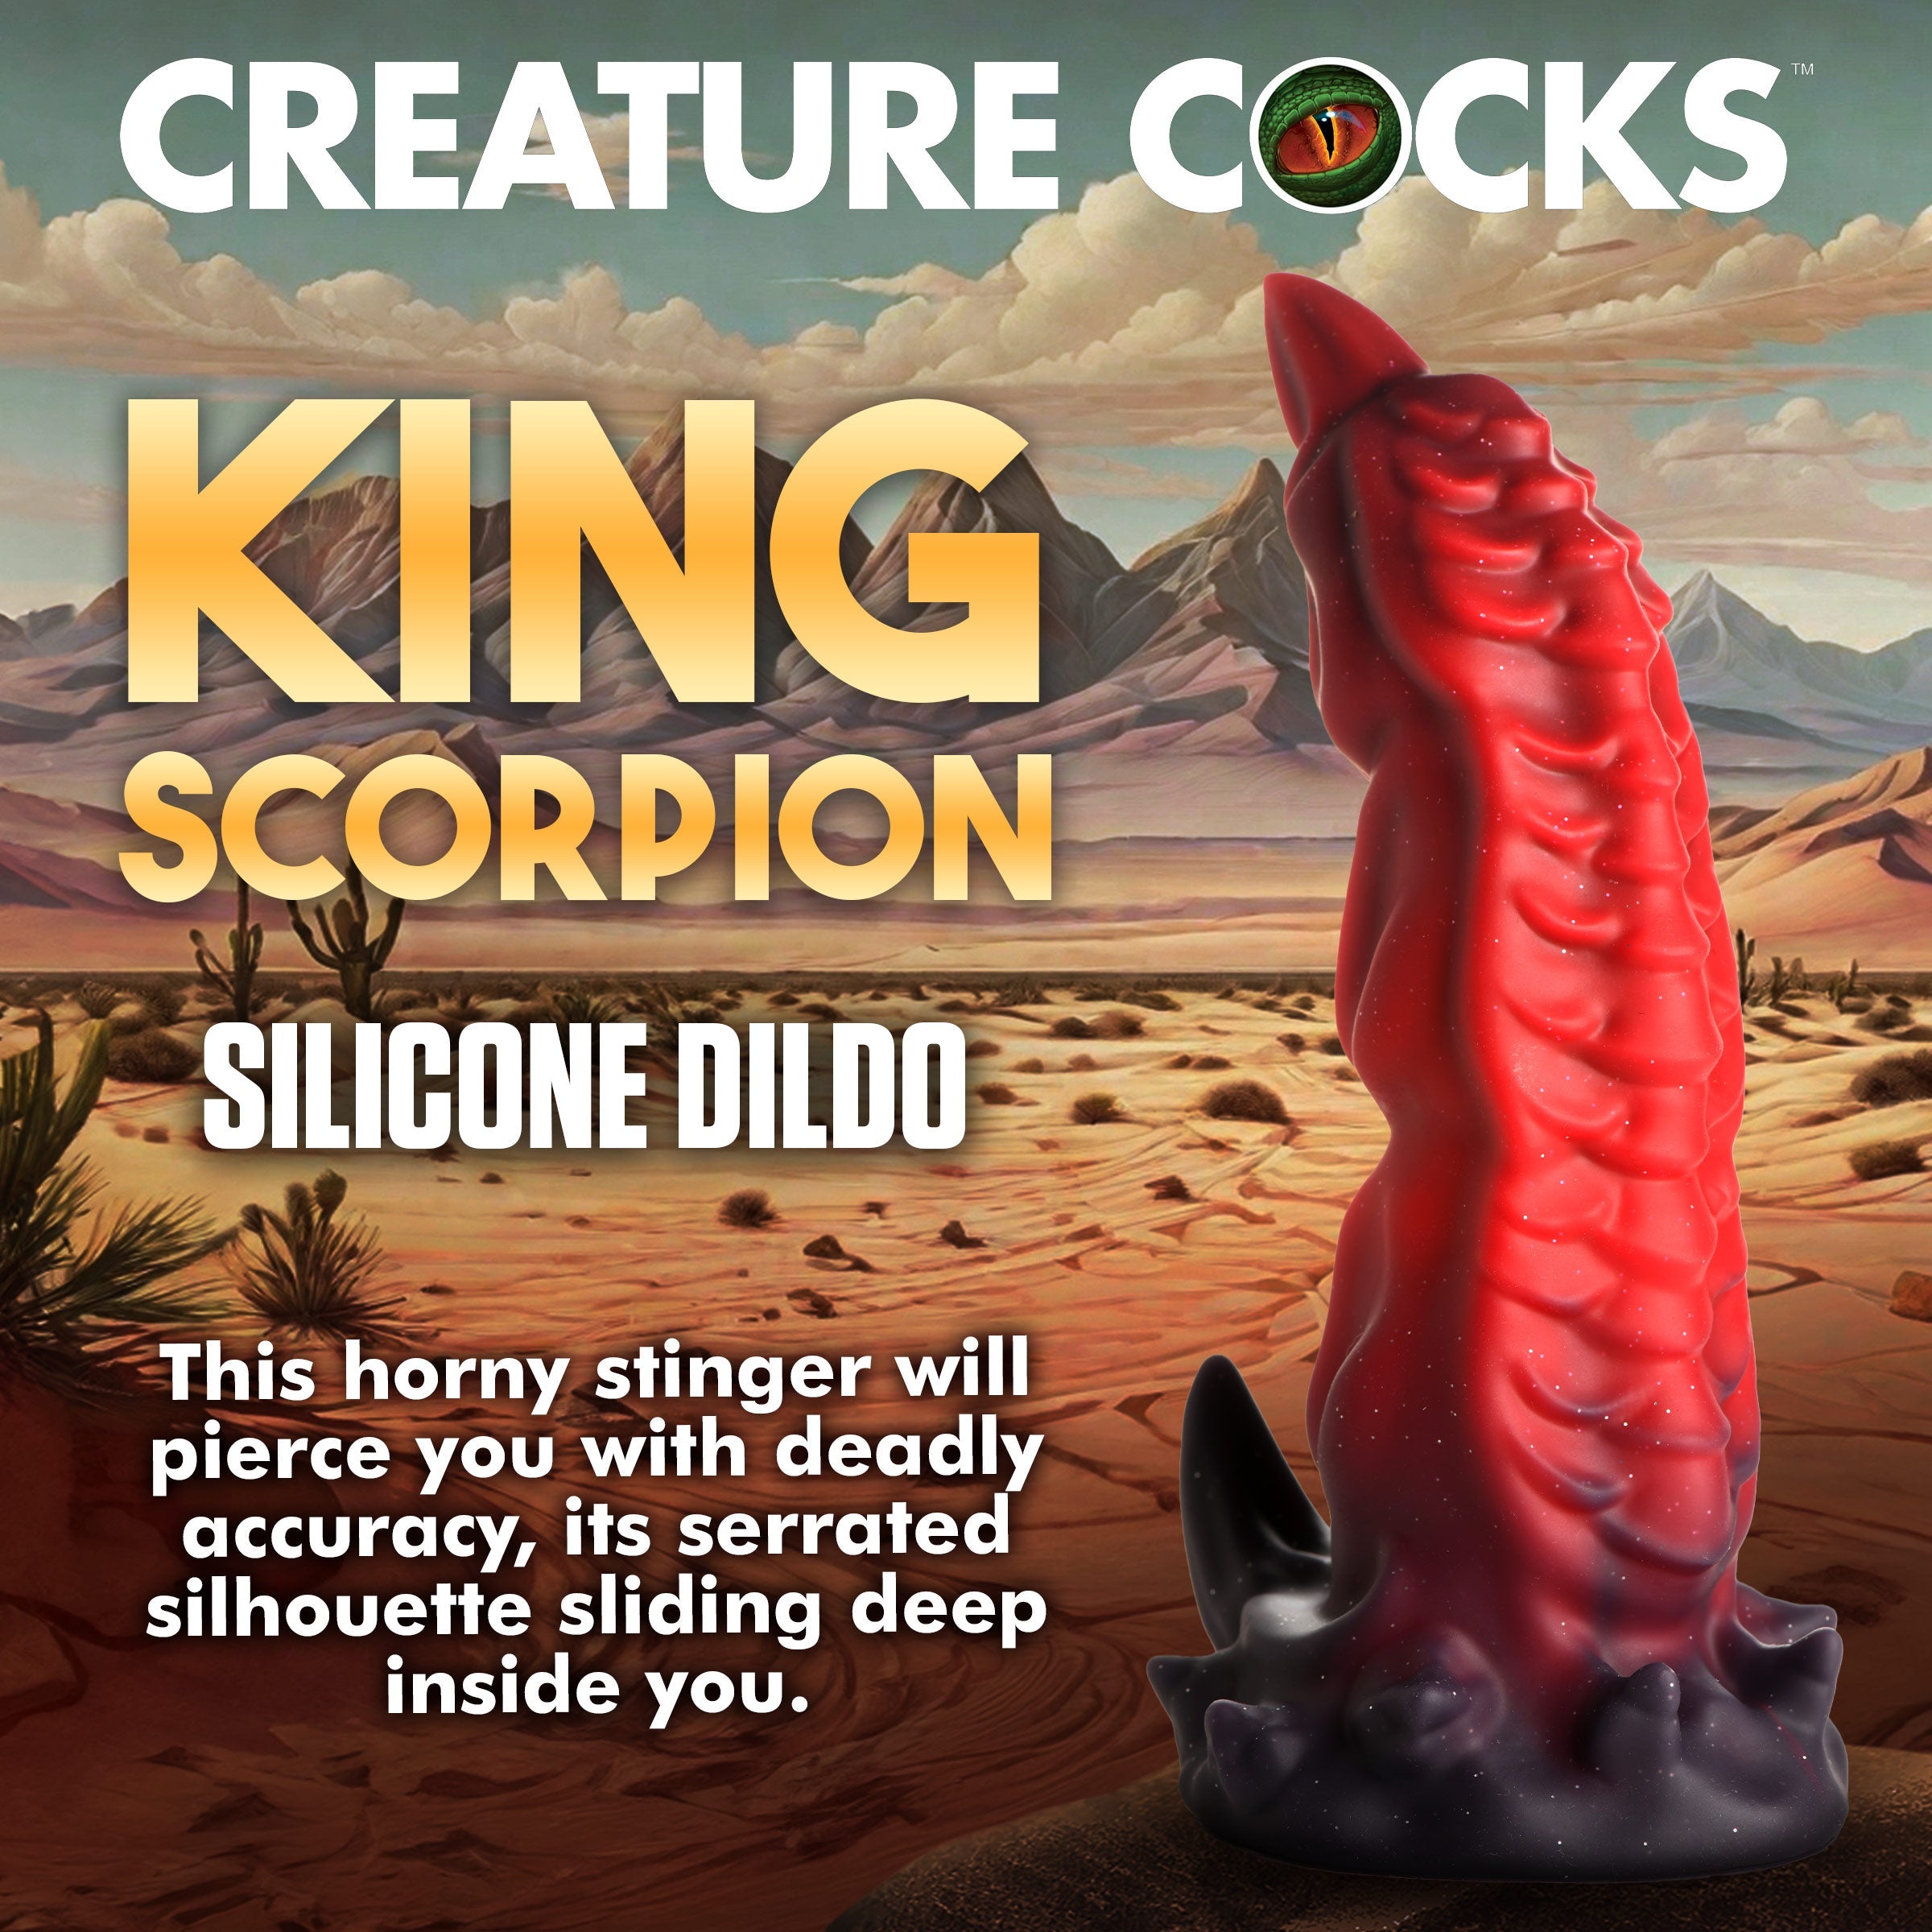 King Scorpion Silicone Dildo